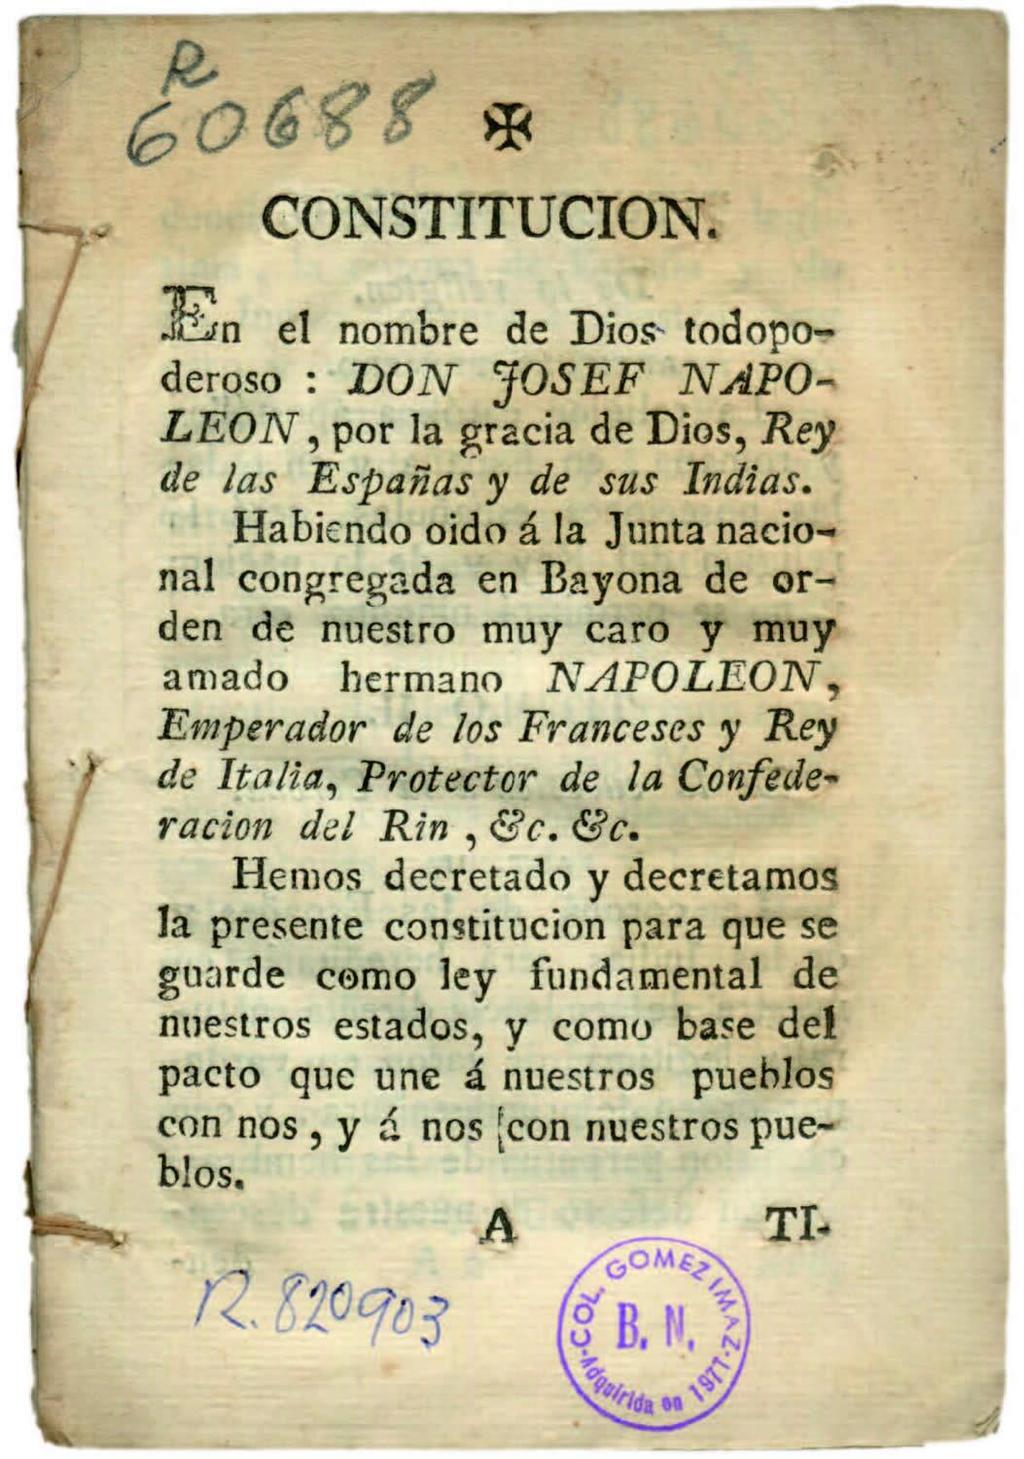 Imagen de: https://biombohistorico.blogspot.com/2014/05/el-estatutode-bayona-1808.html Artículo 87.